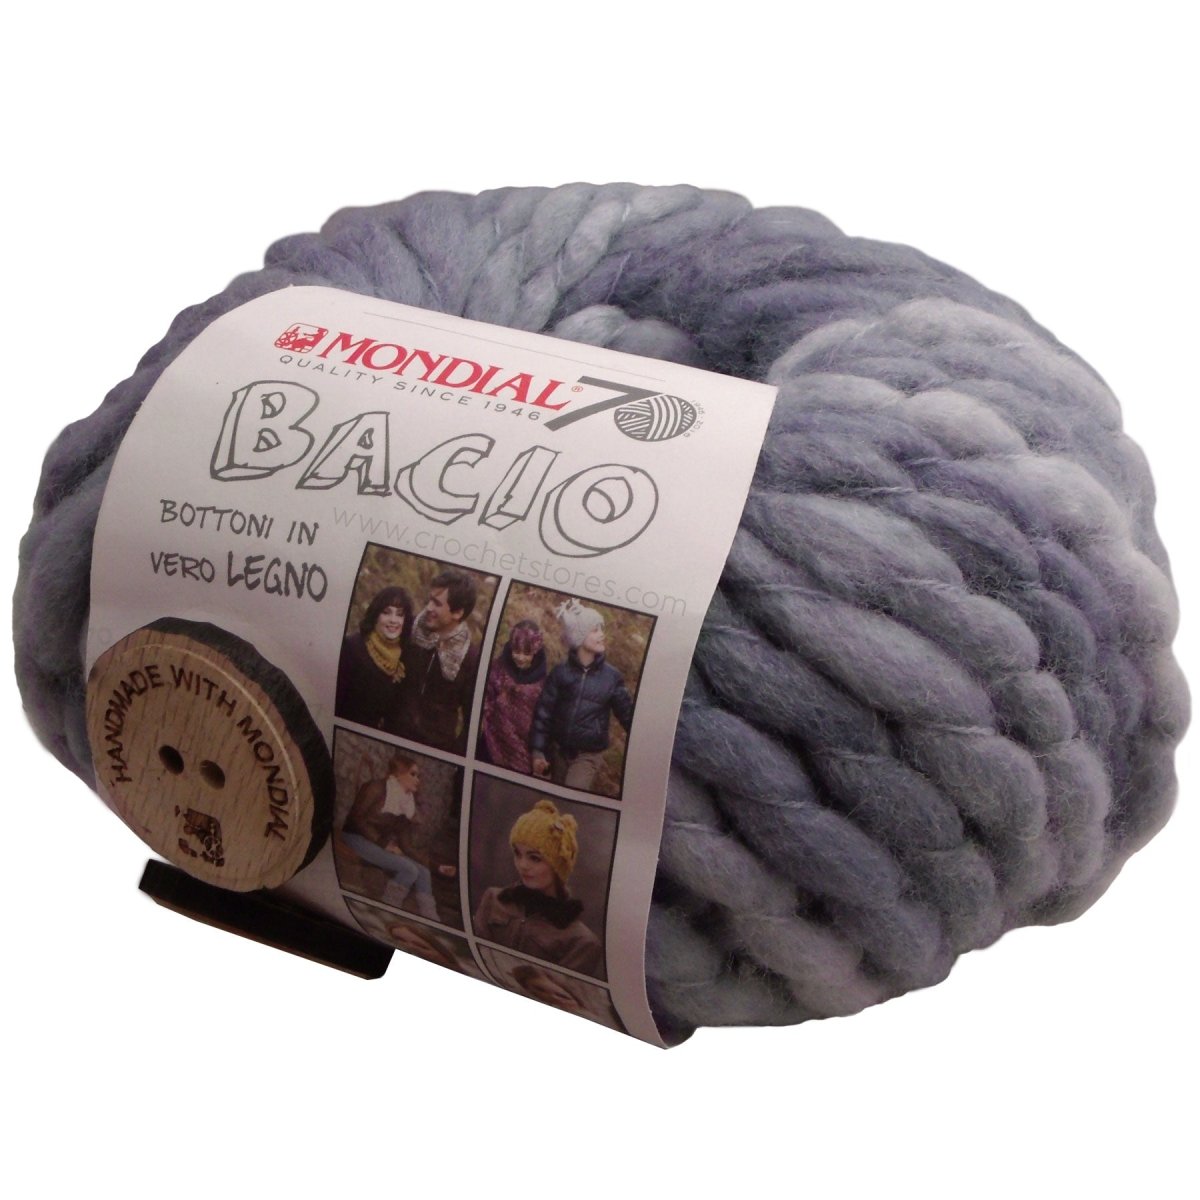 BACIO - Crochetstores12018248020586411542